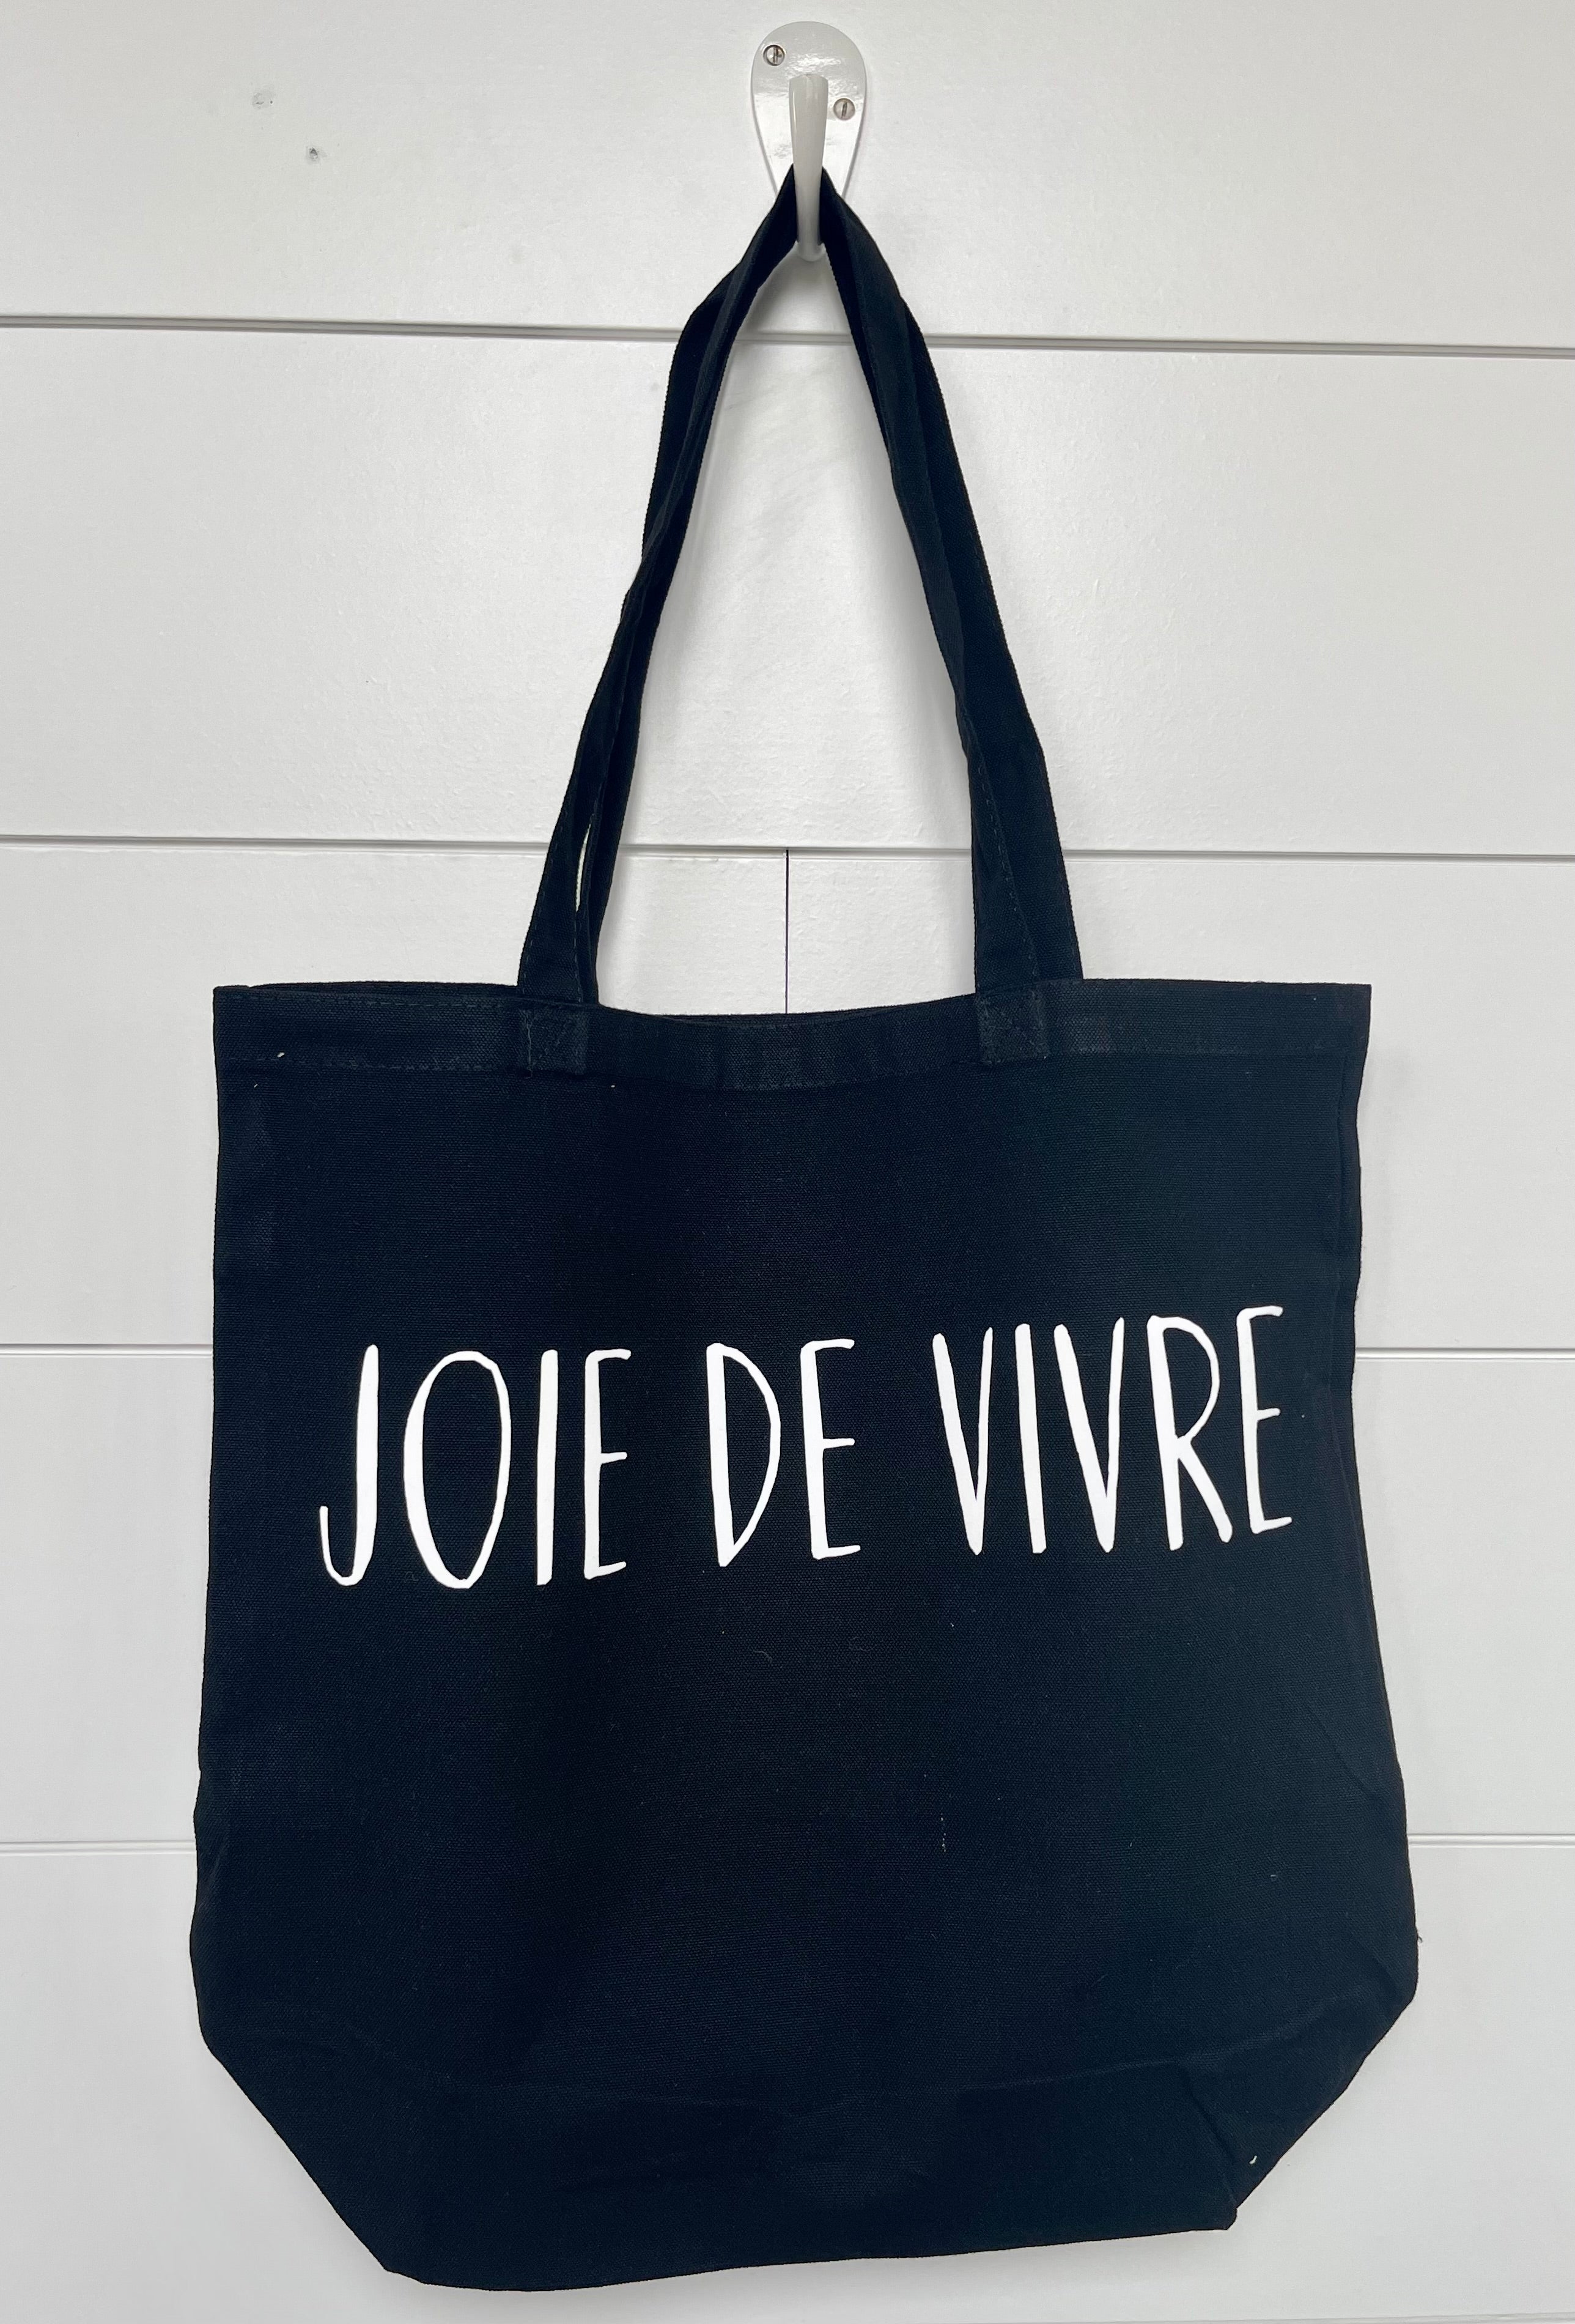 Joie de vivre Black Tote Bag “joy of living”